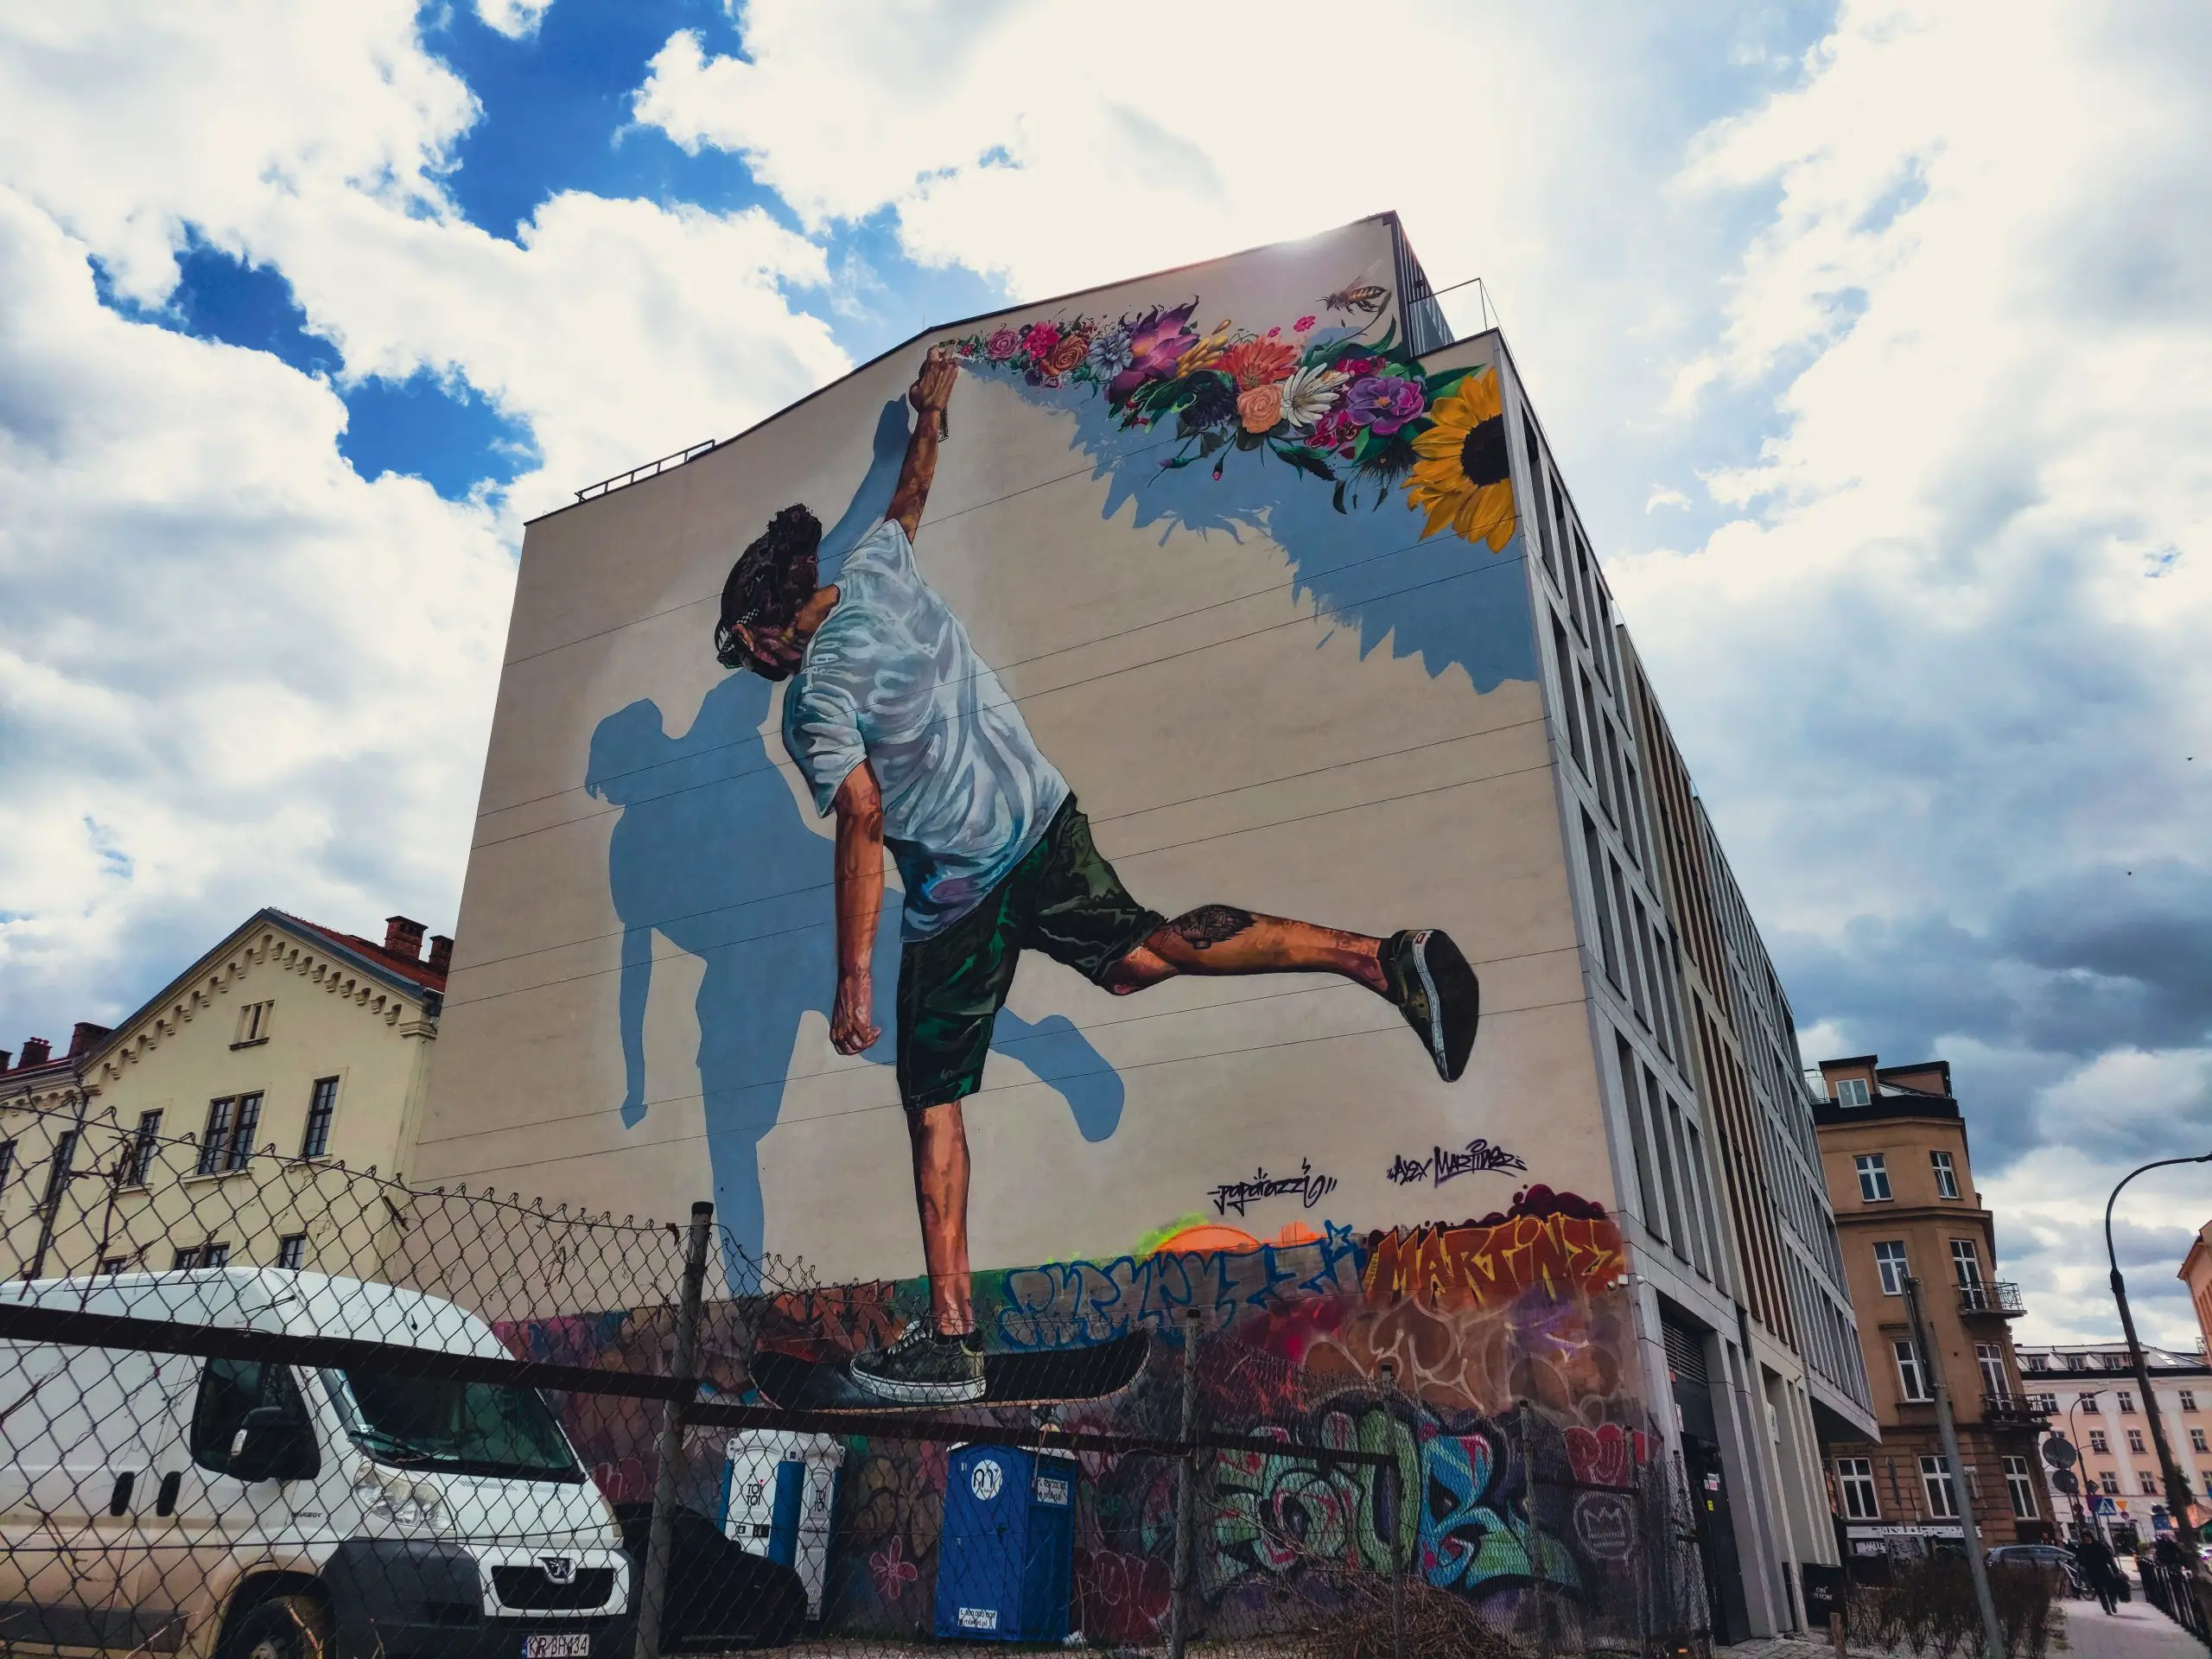 beautiful mural in krakow city center